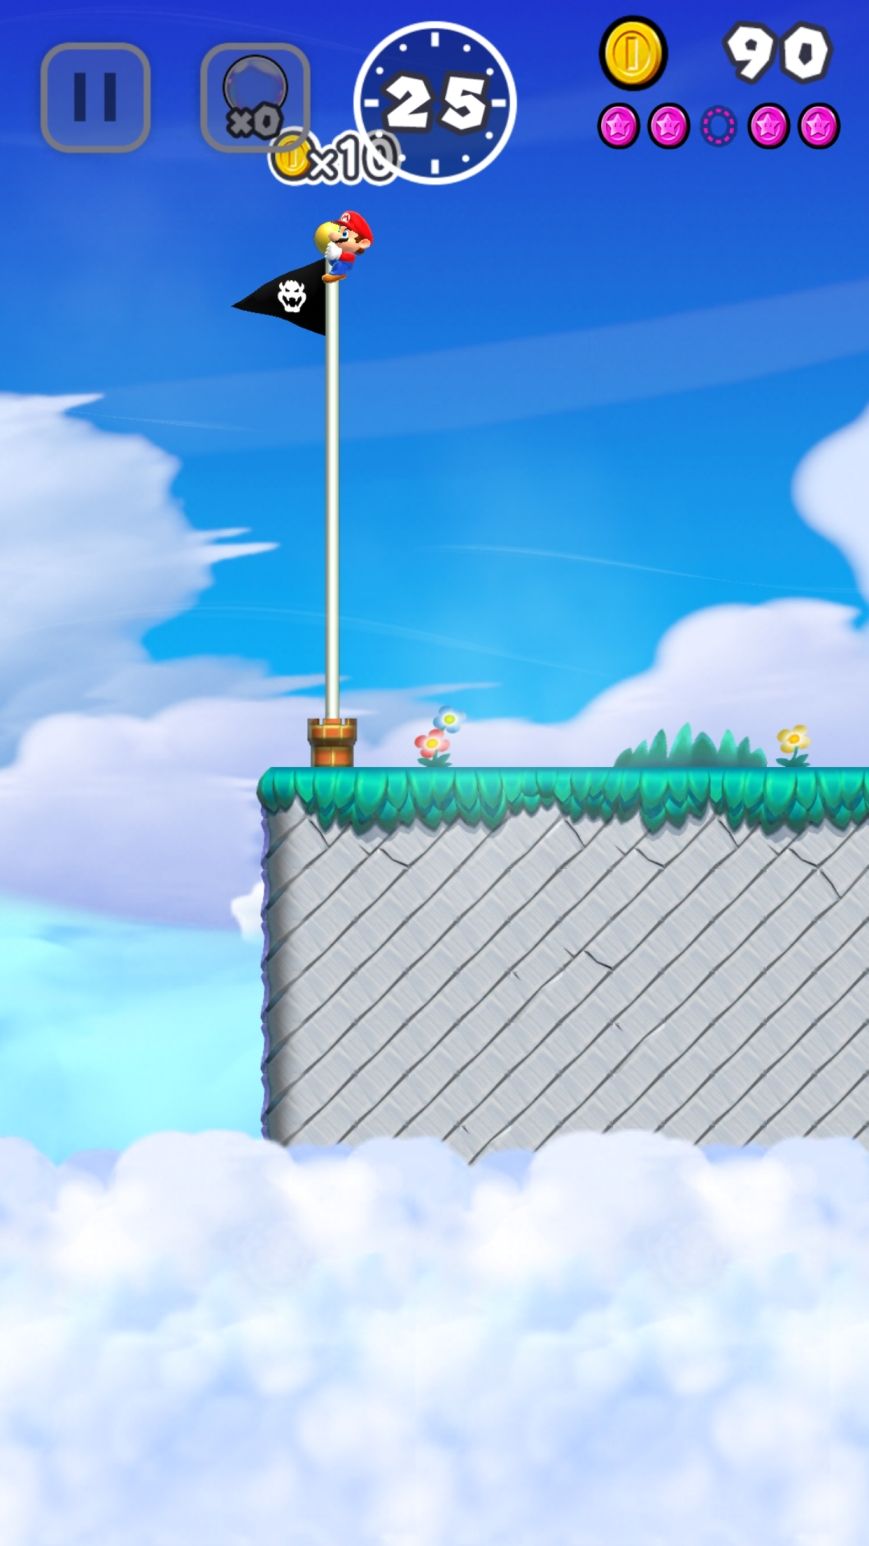 Super Mario Run (copie d'écran 9 sur iPhone / iPad)